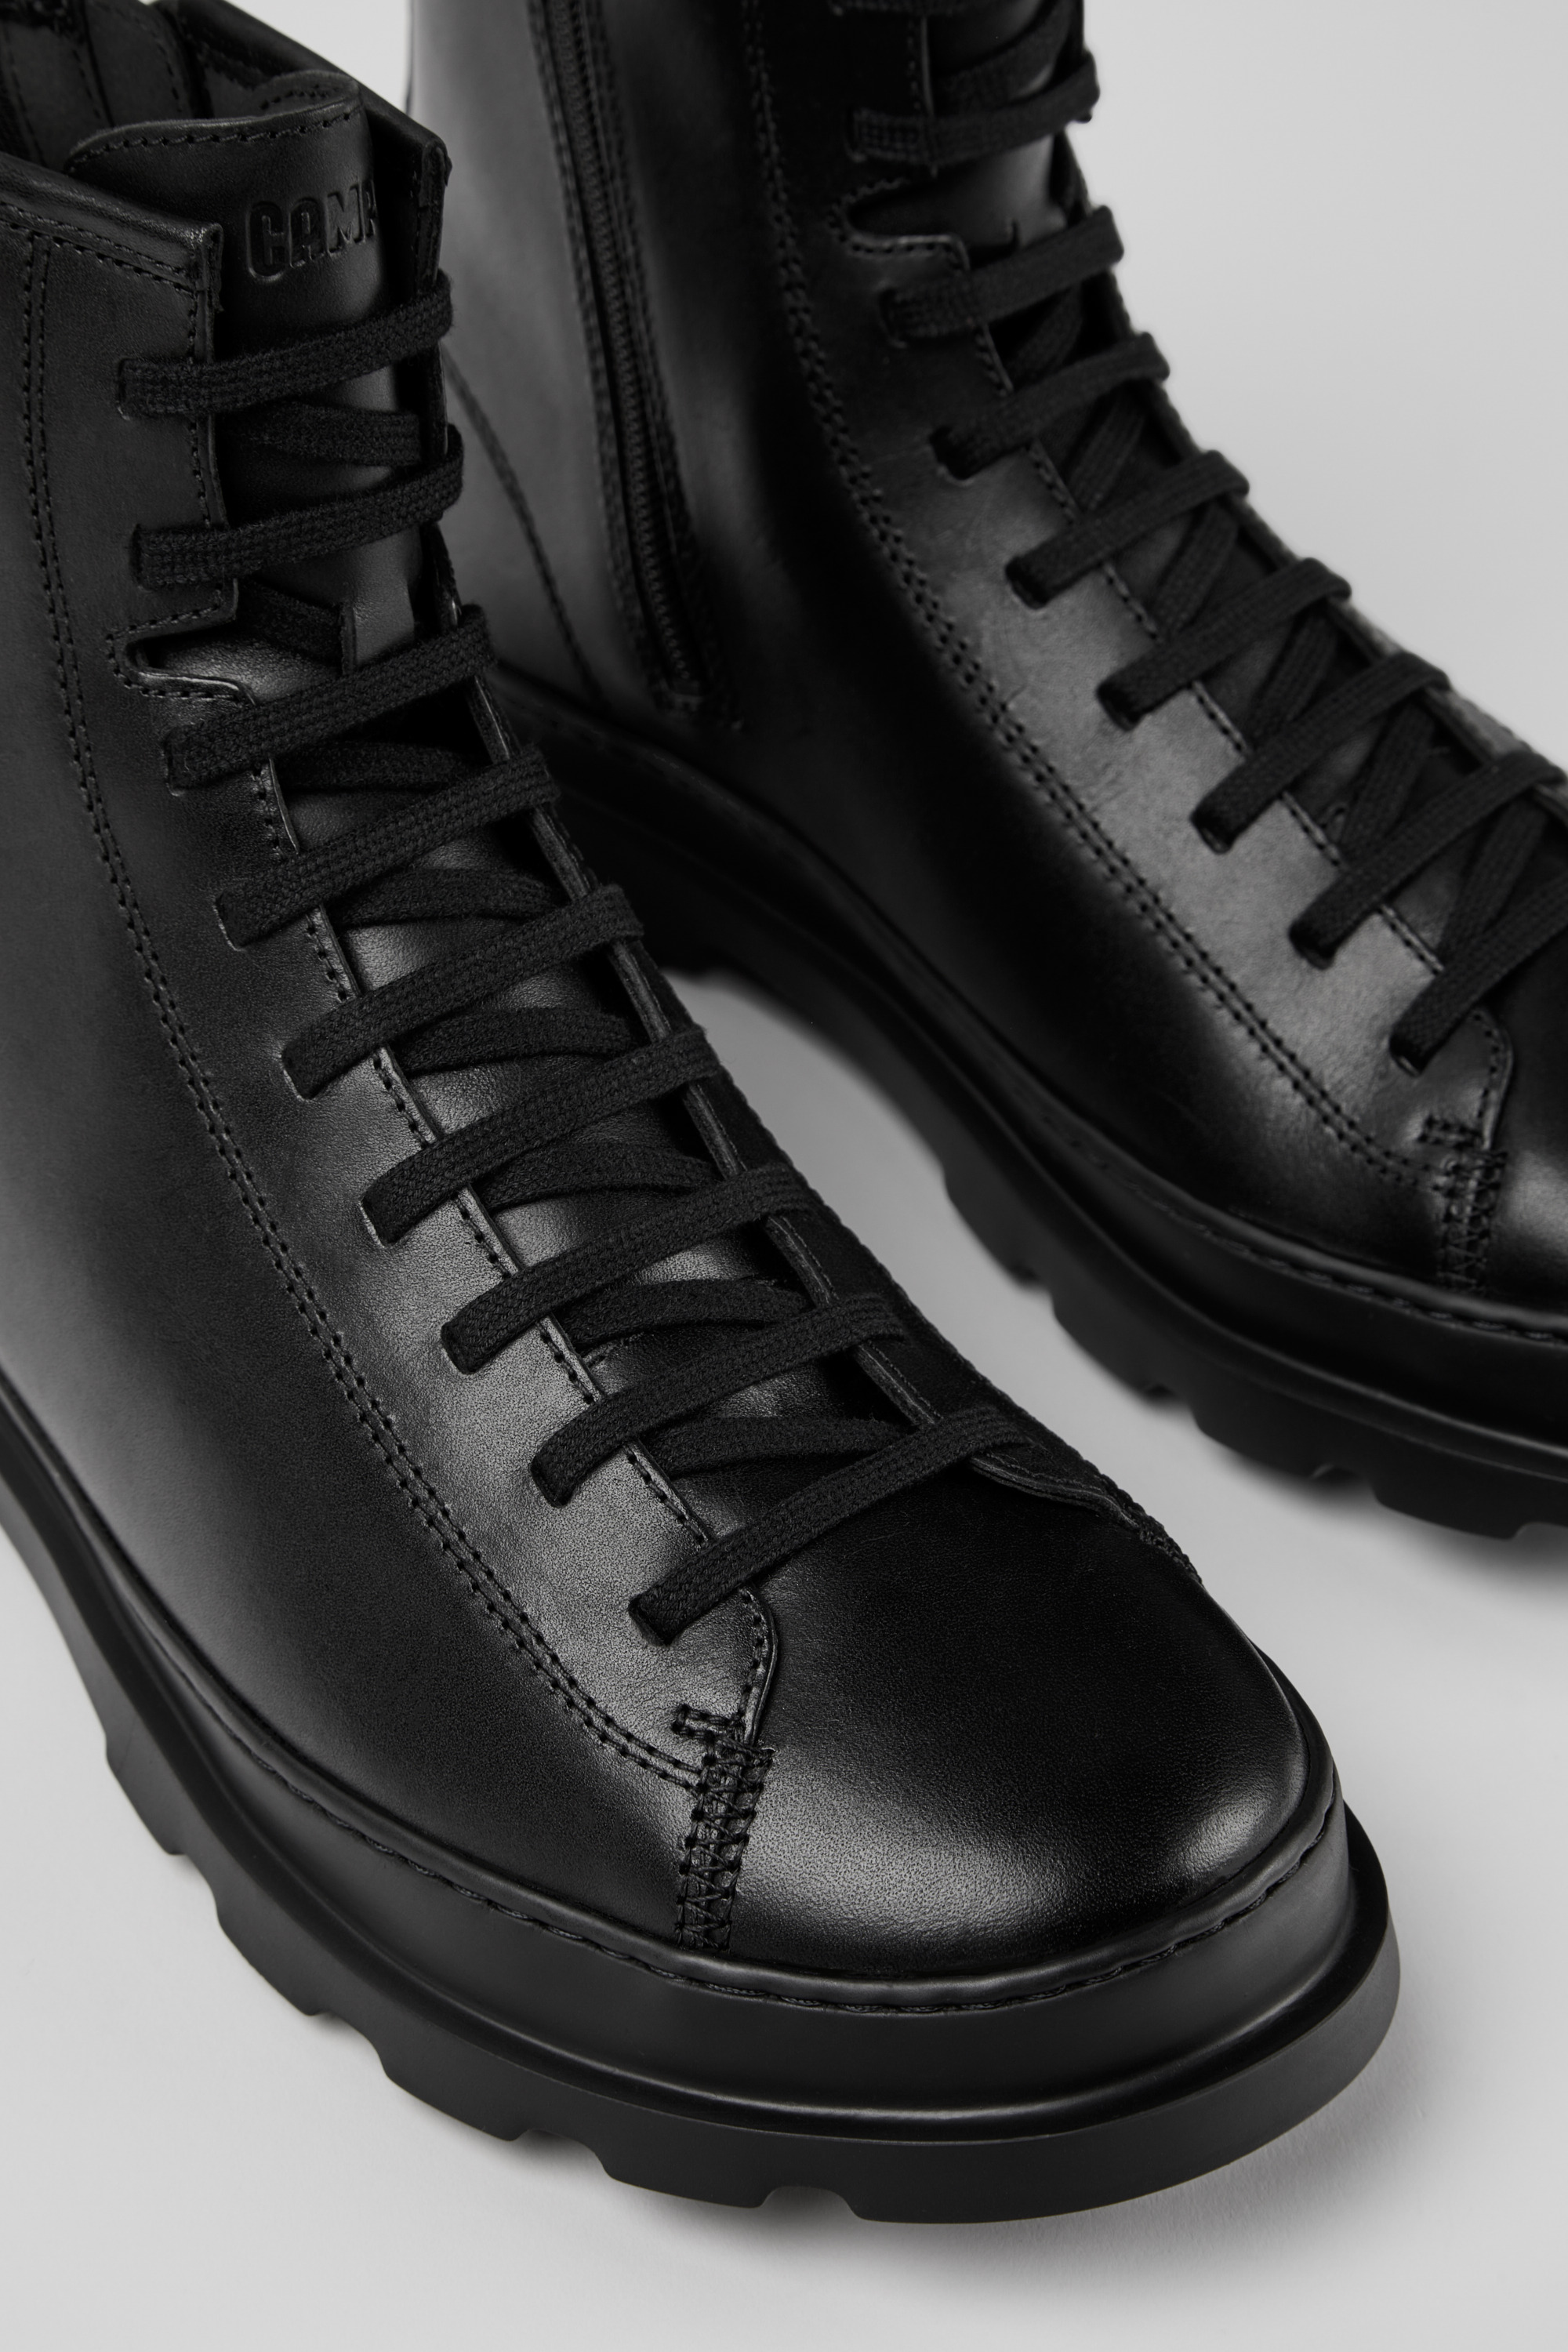 vernieuwen Getuigen metro BRUTUS Black Ankle Boots for Men - Spring/Summer collection - Camper Saudi  Arabia